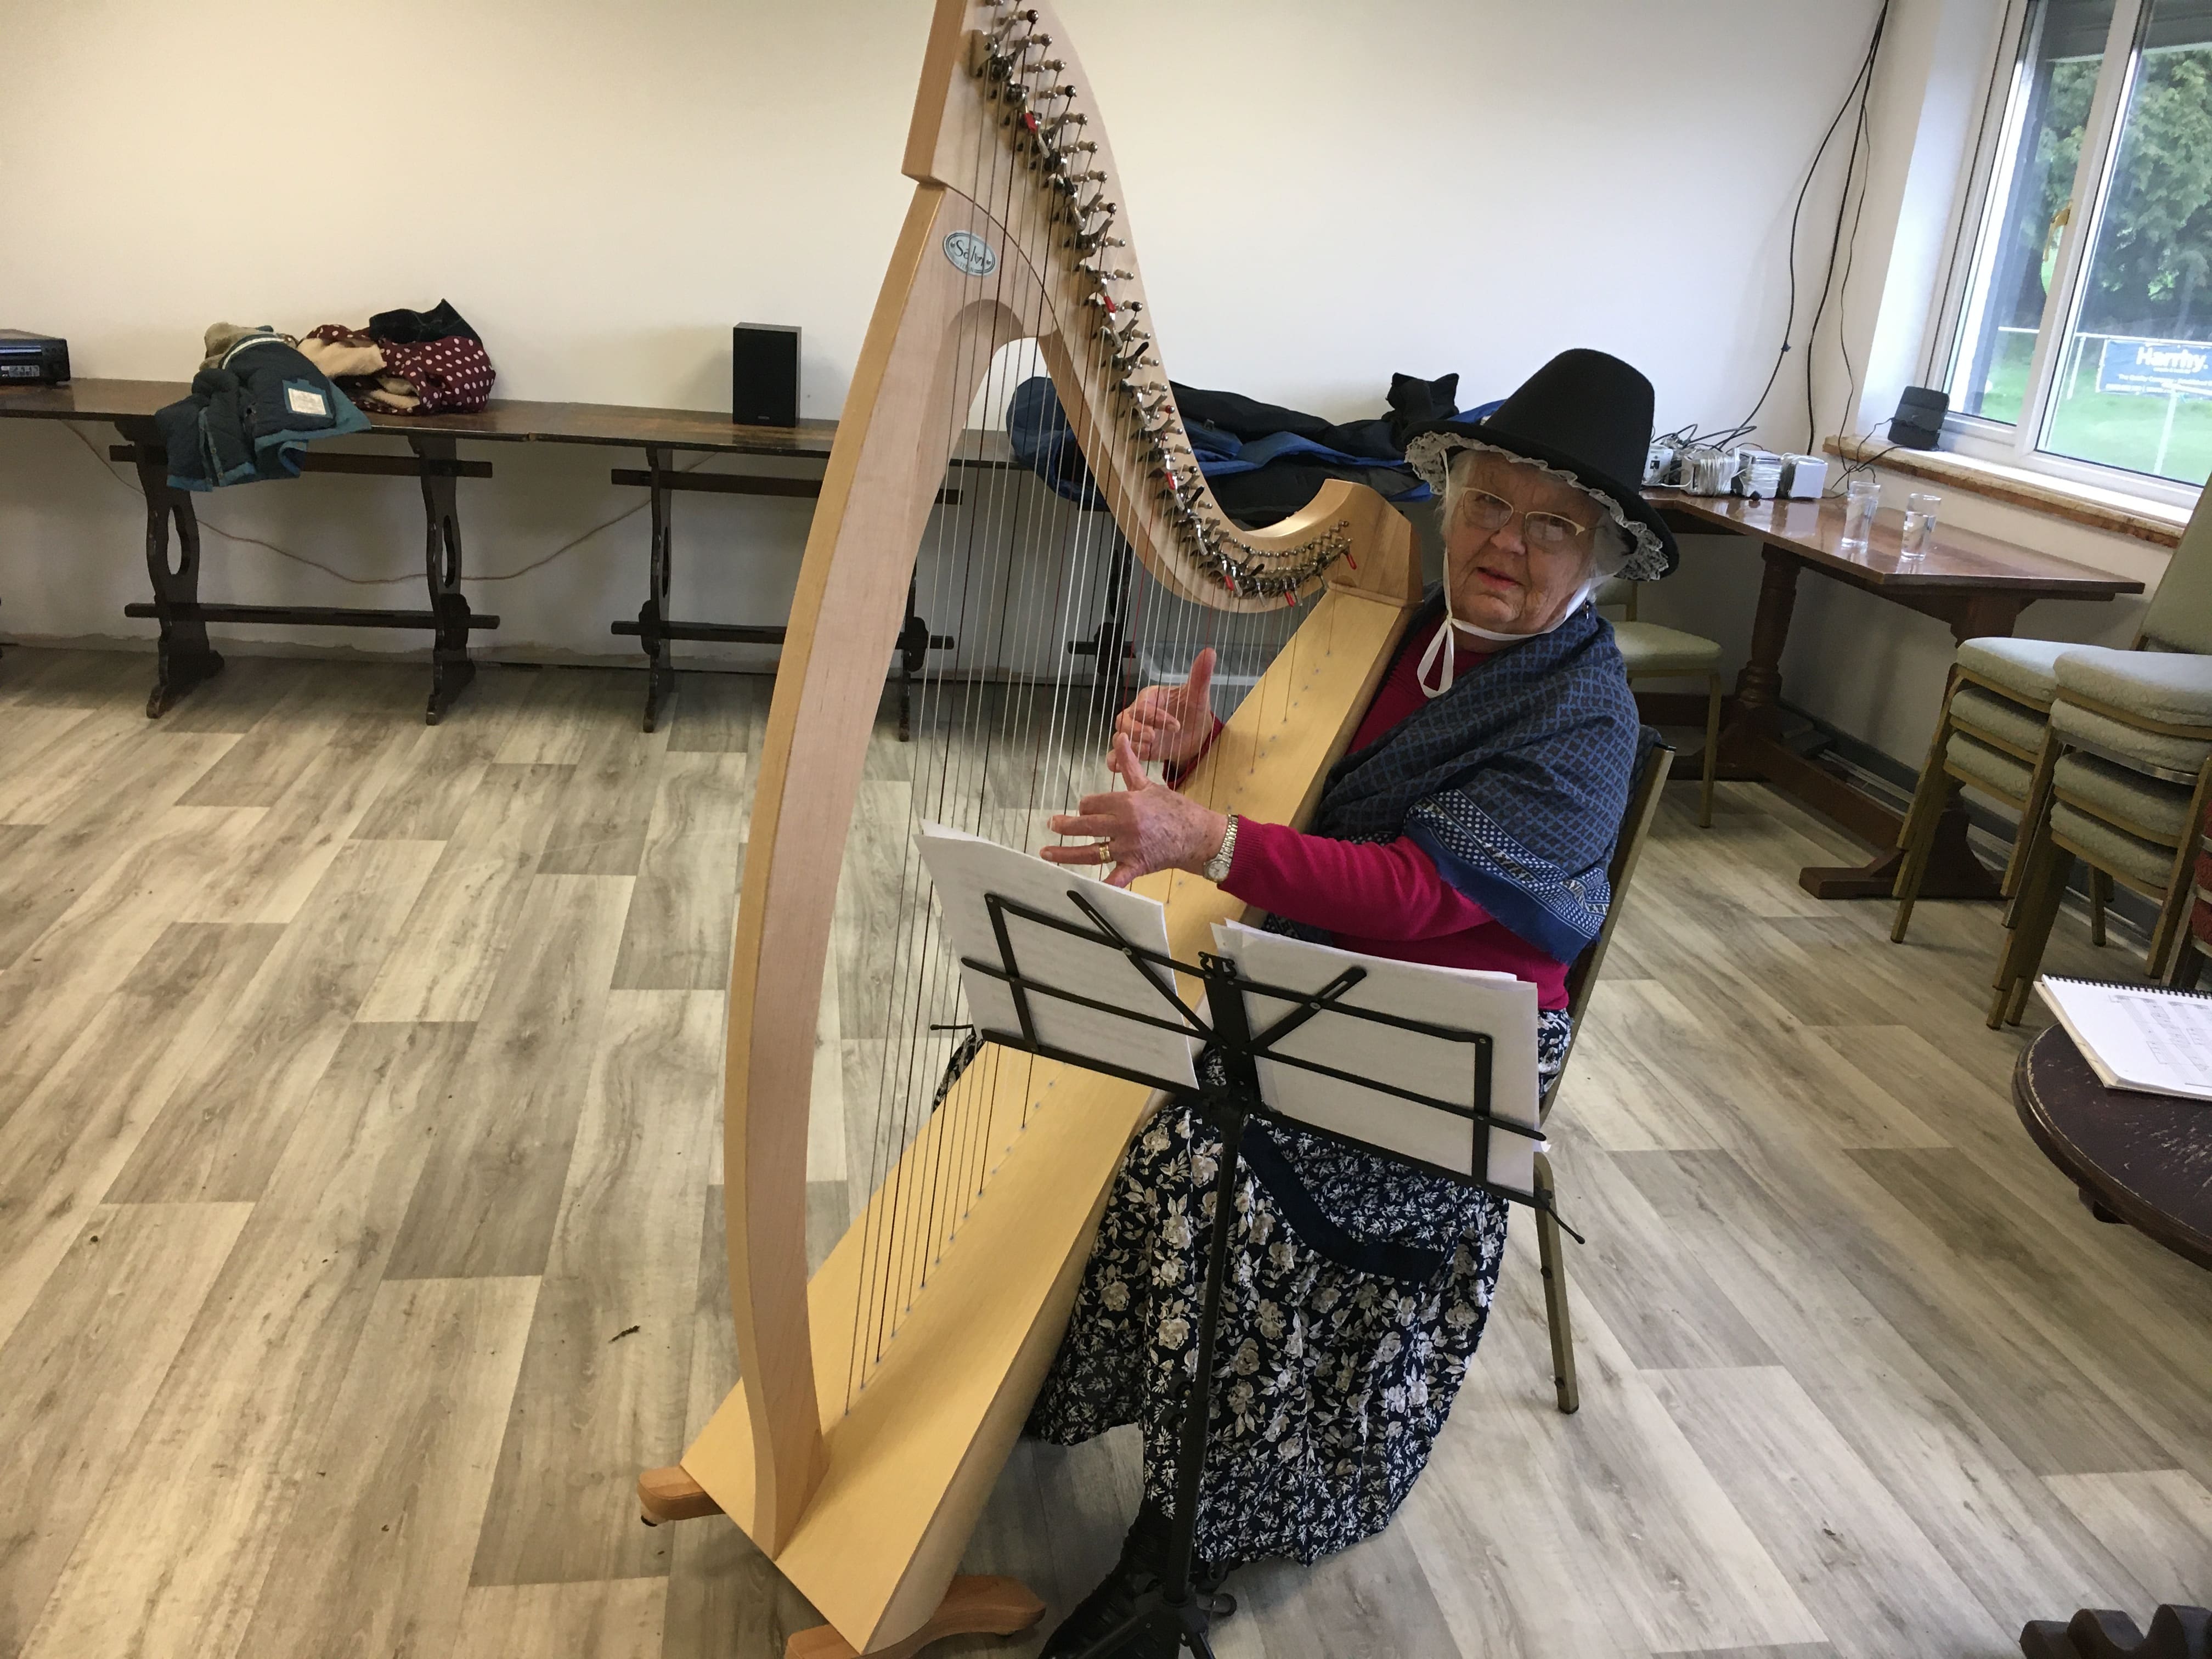 Pamela plays the harp